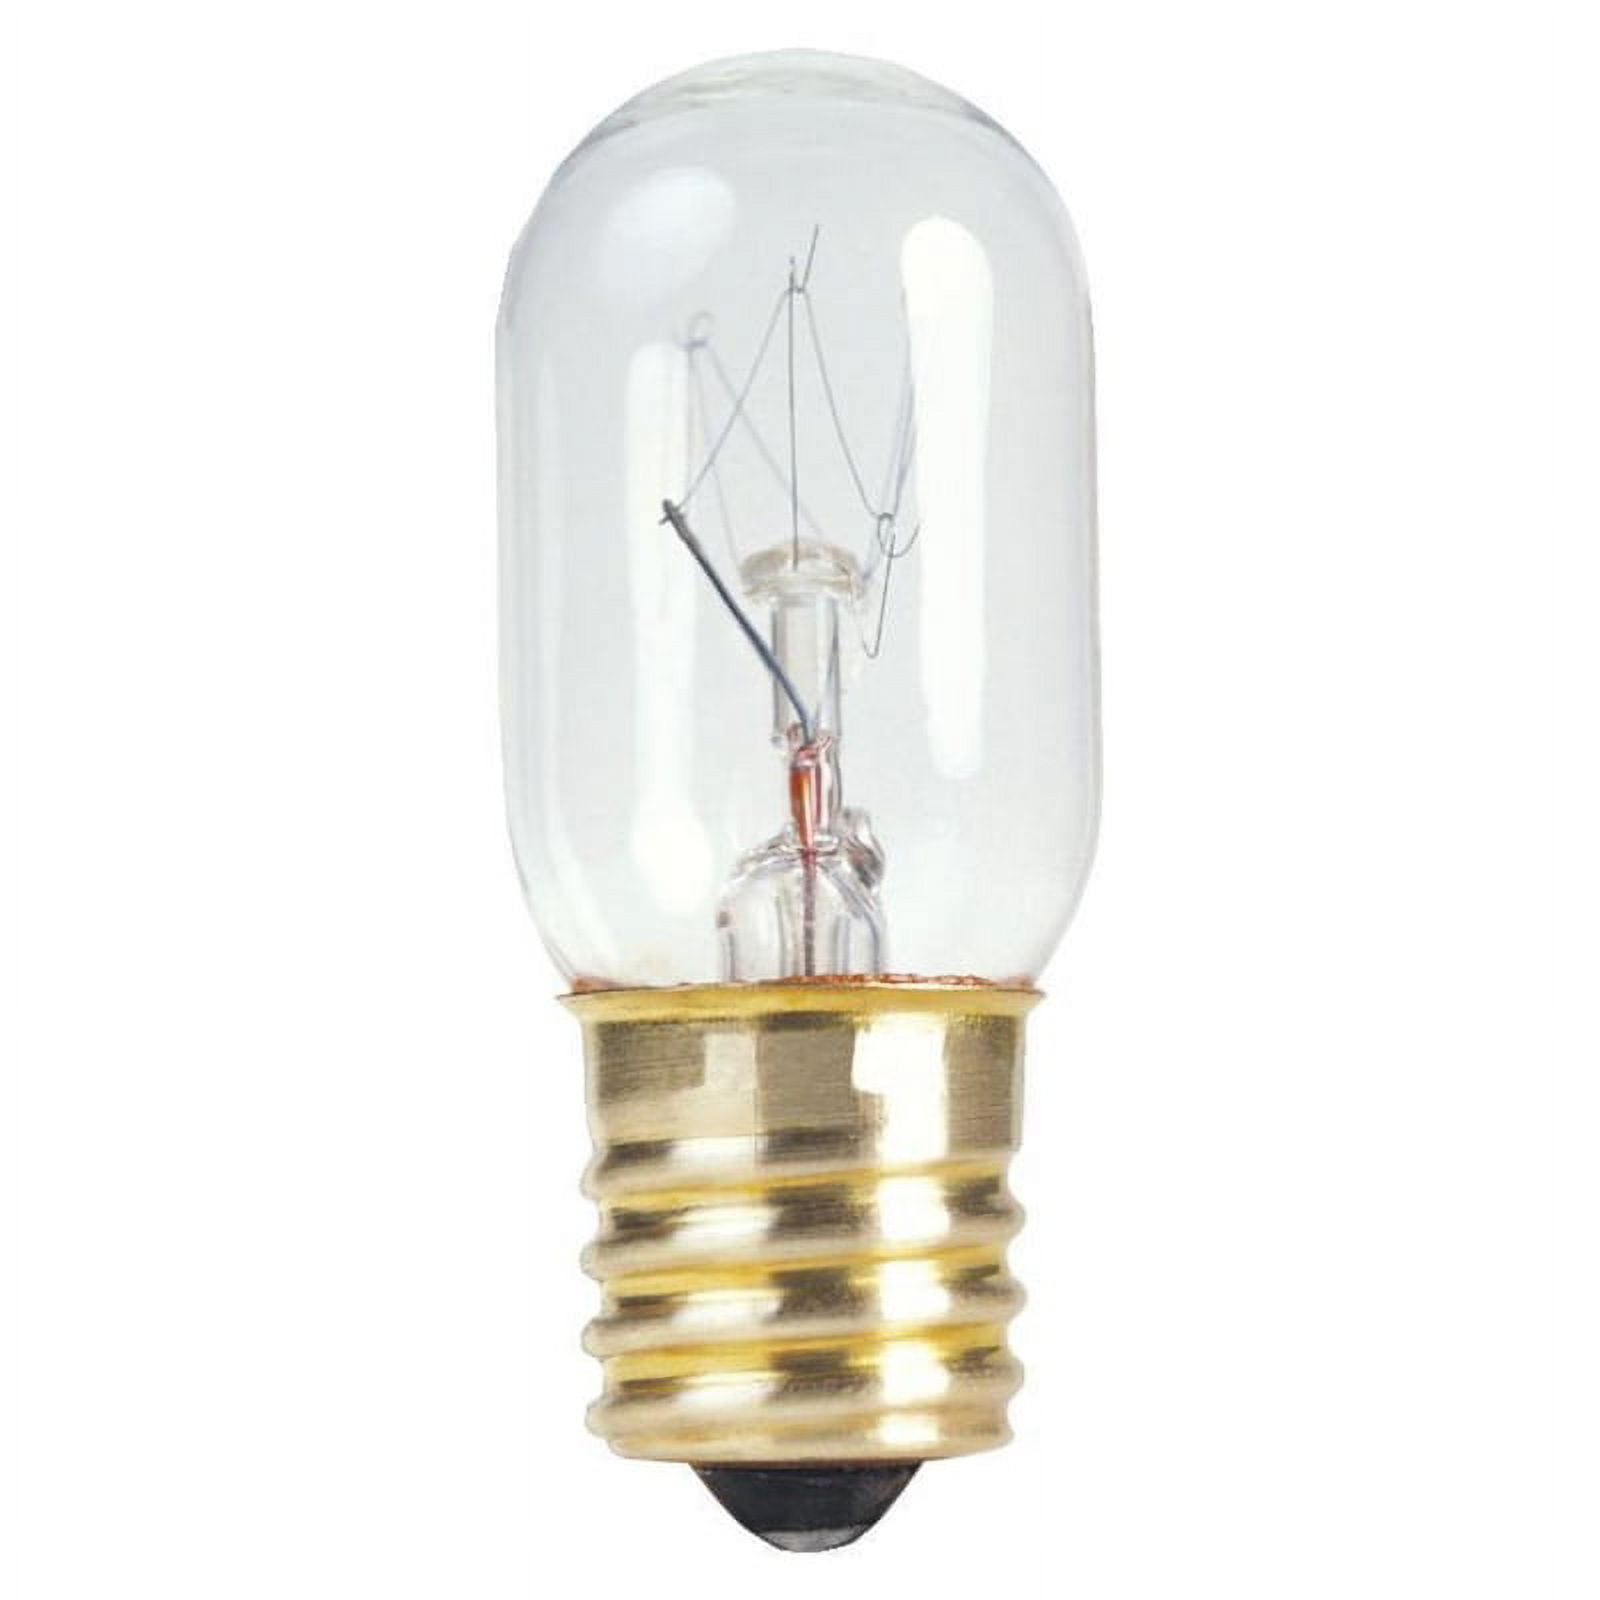 3914694 25 Watt T7 Specialty Incandescent Bulb 195 Lumen - Warm White, Pack Of 10